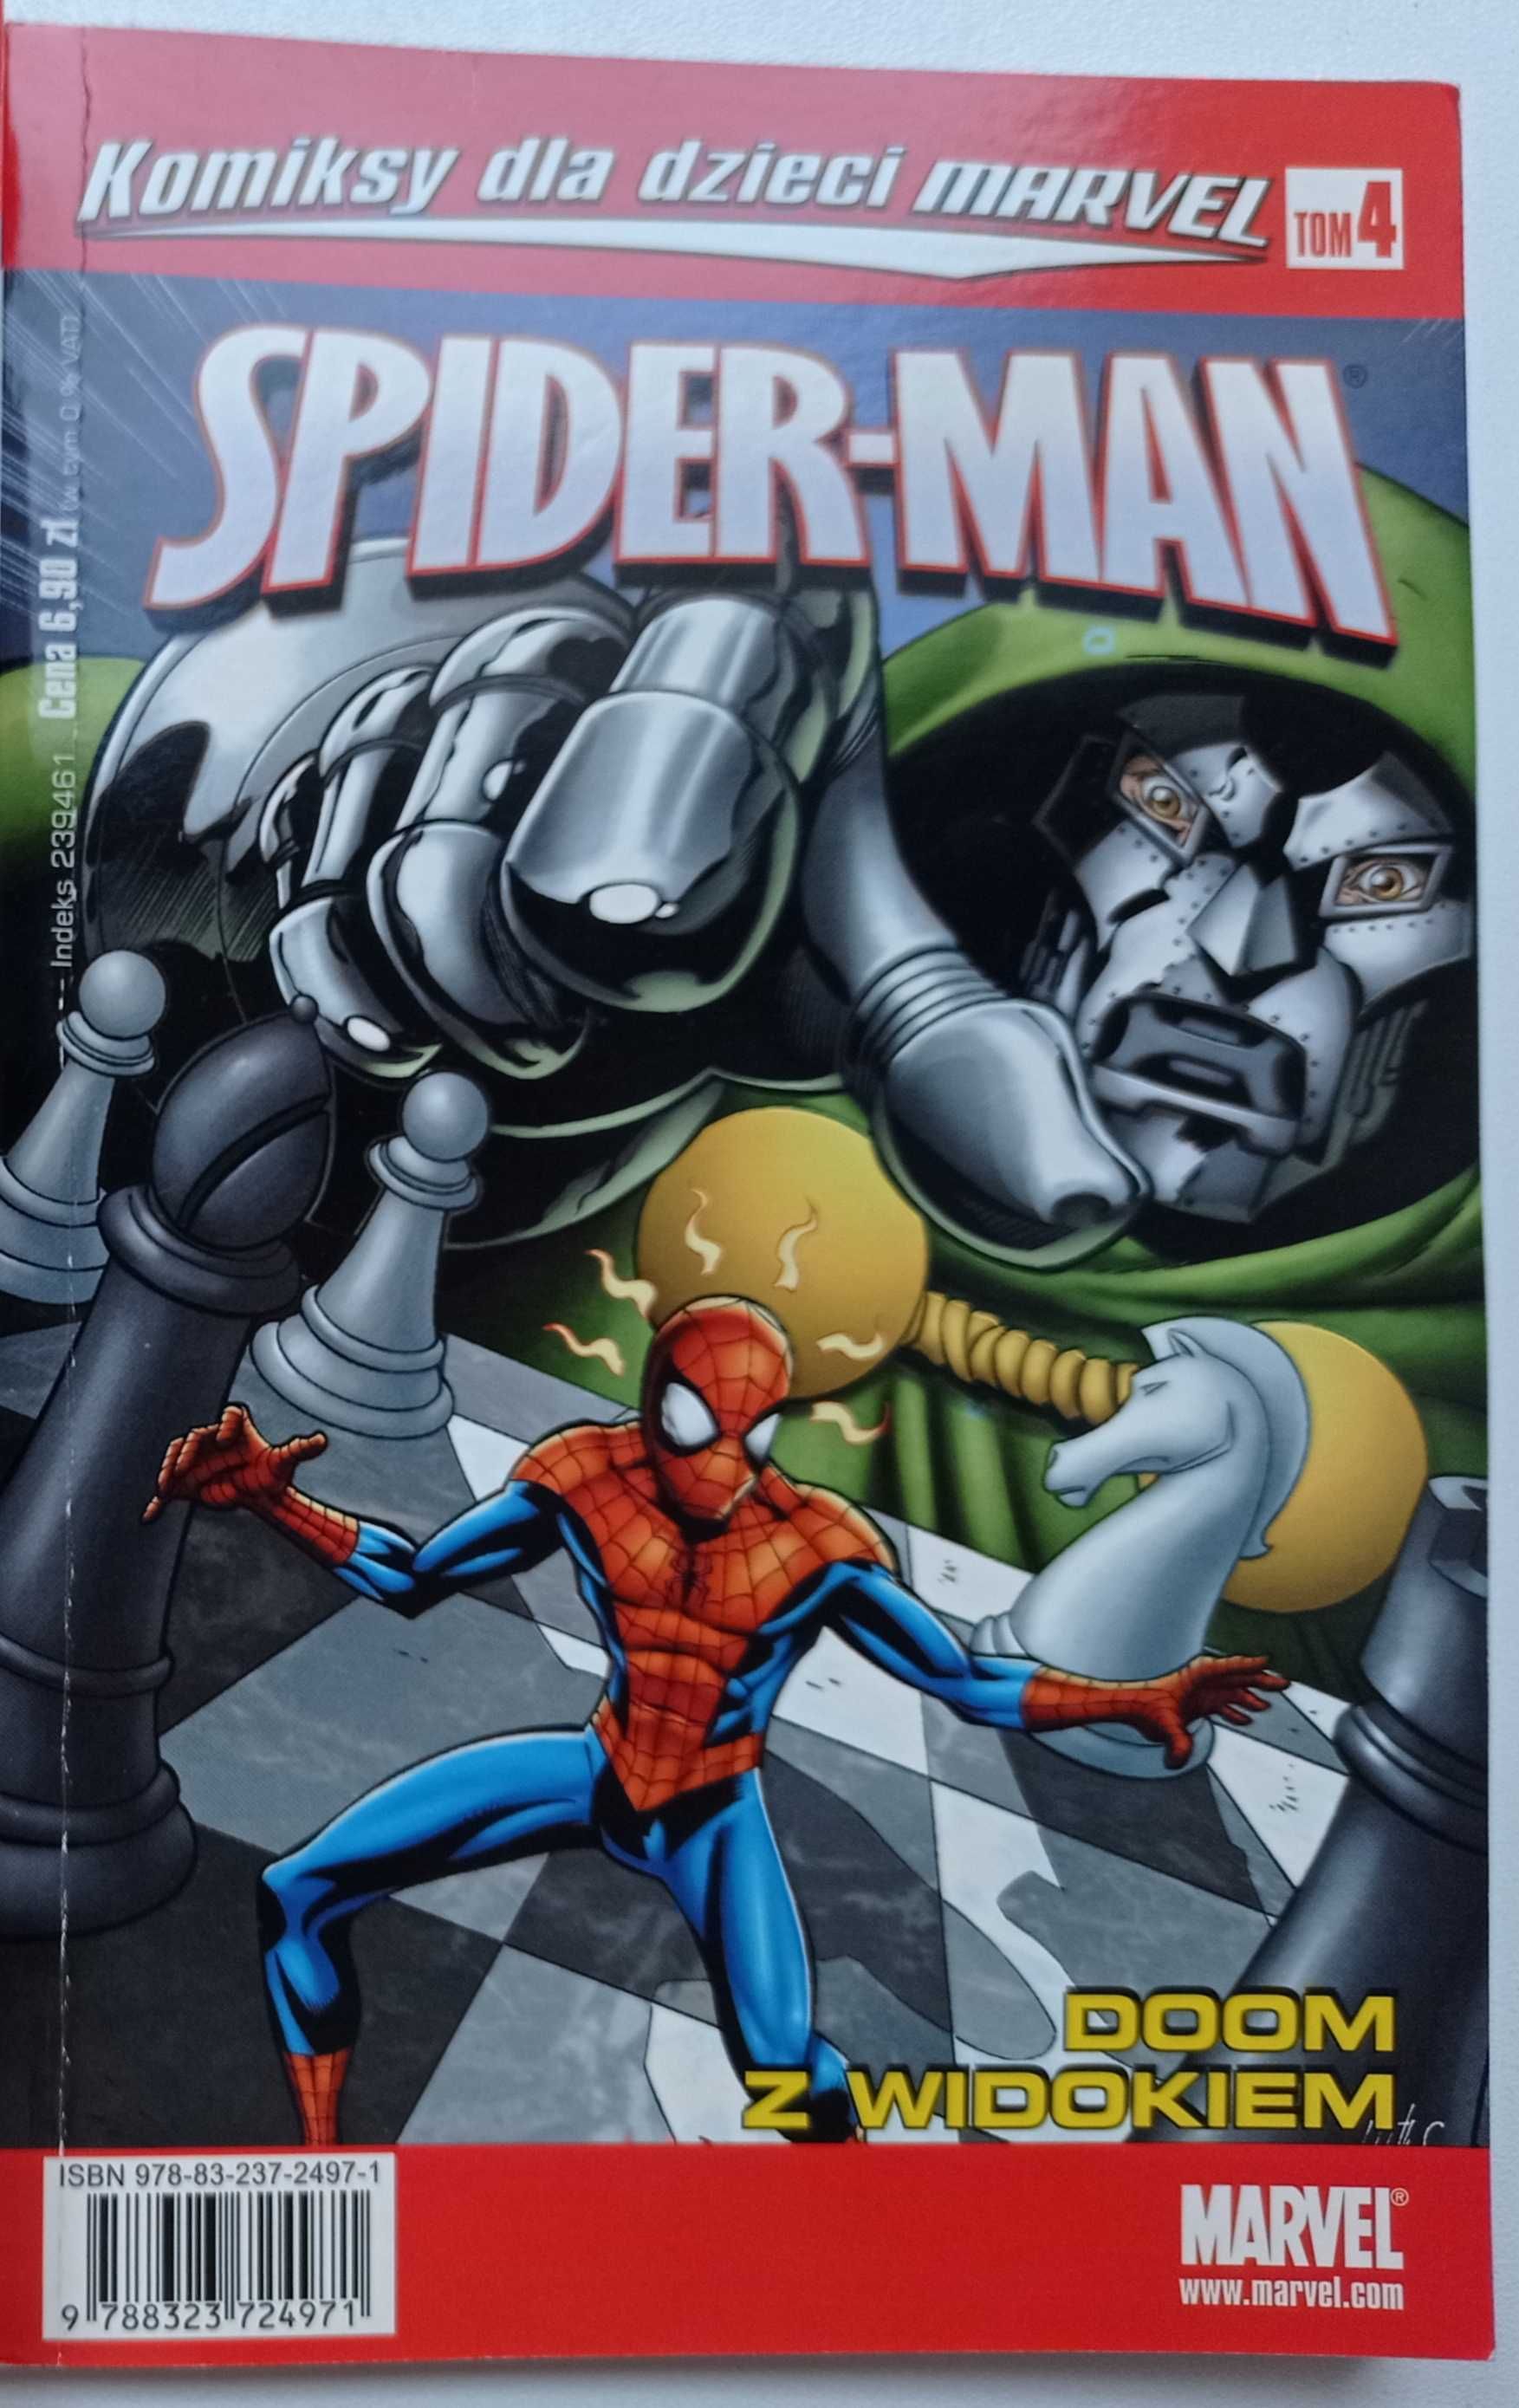 Spider-man Doom z widokiem Marvel Adventures tom 4 Egmont 2008